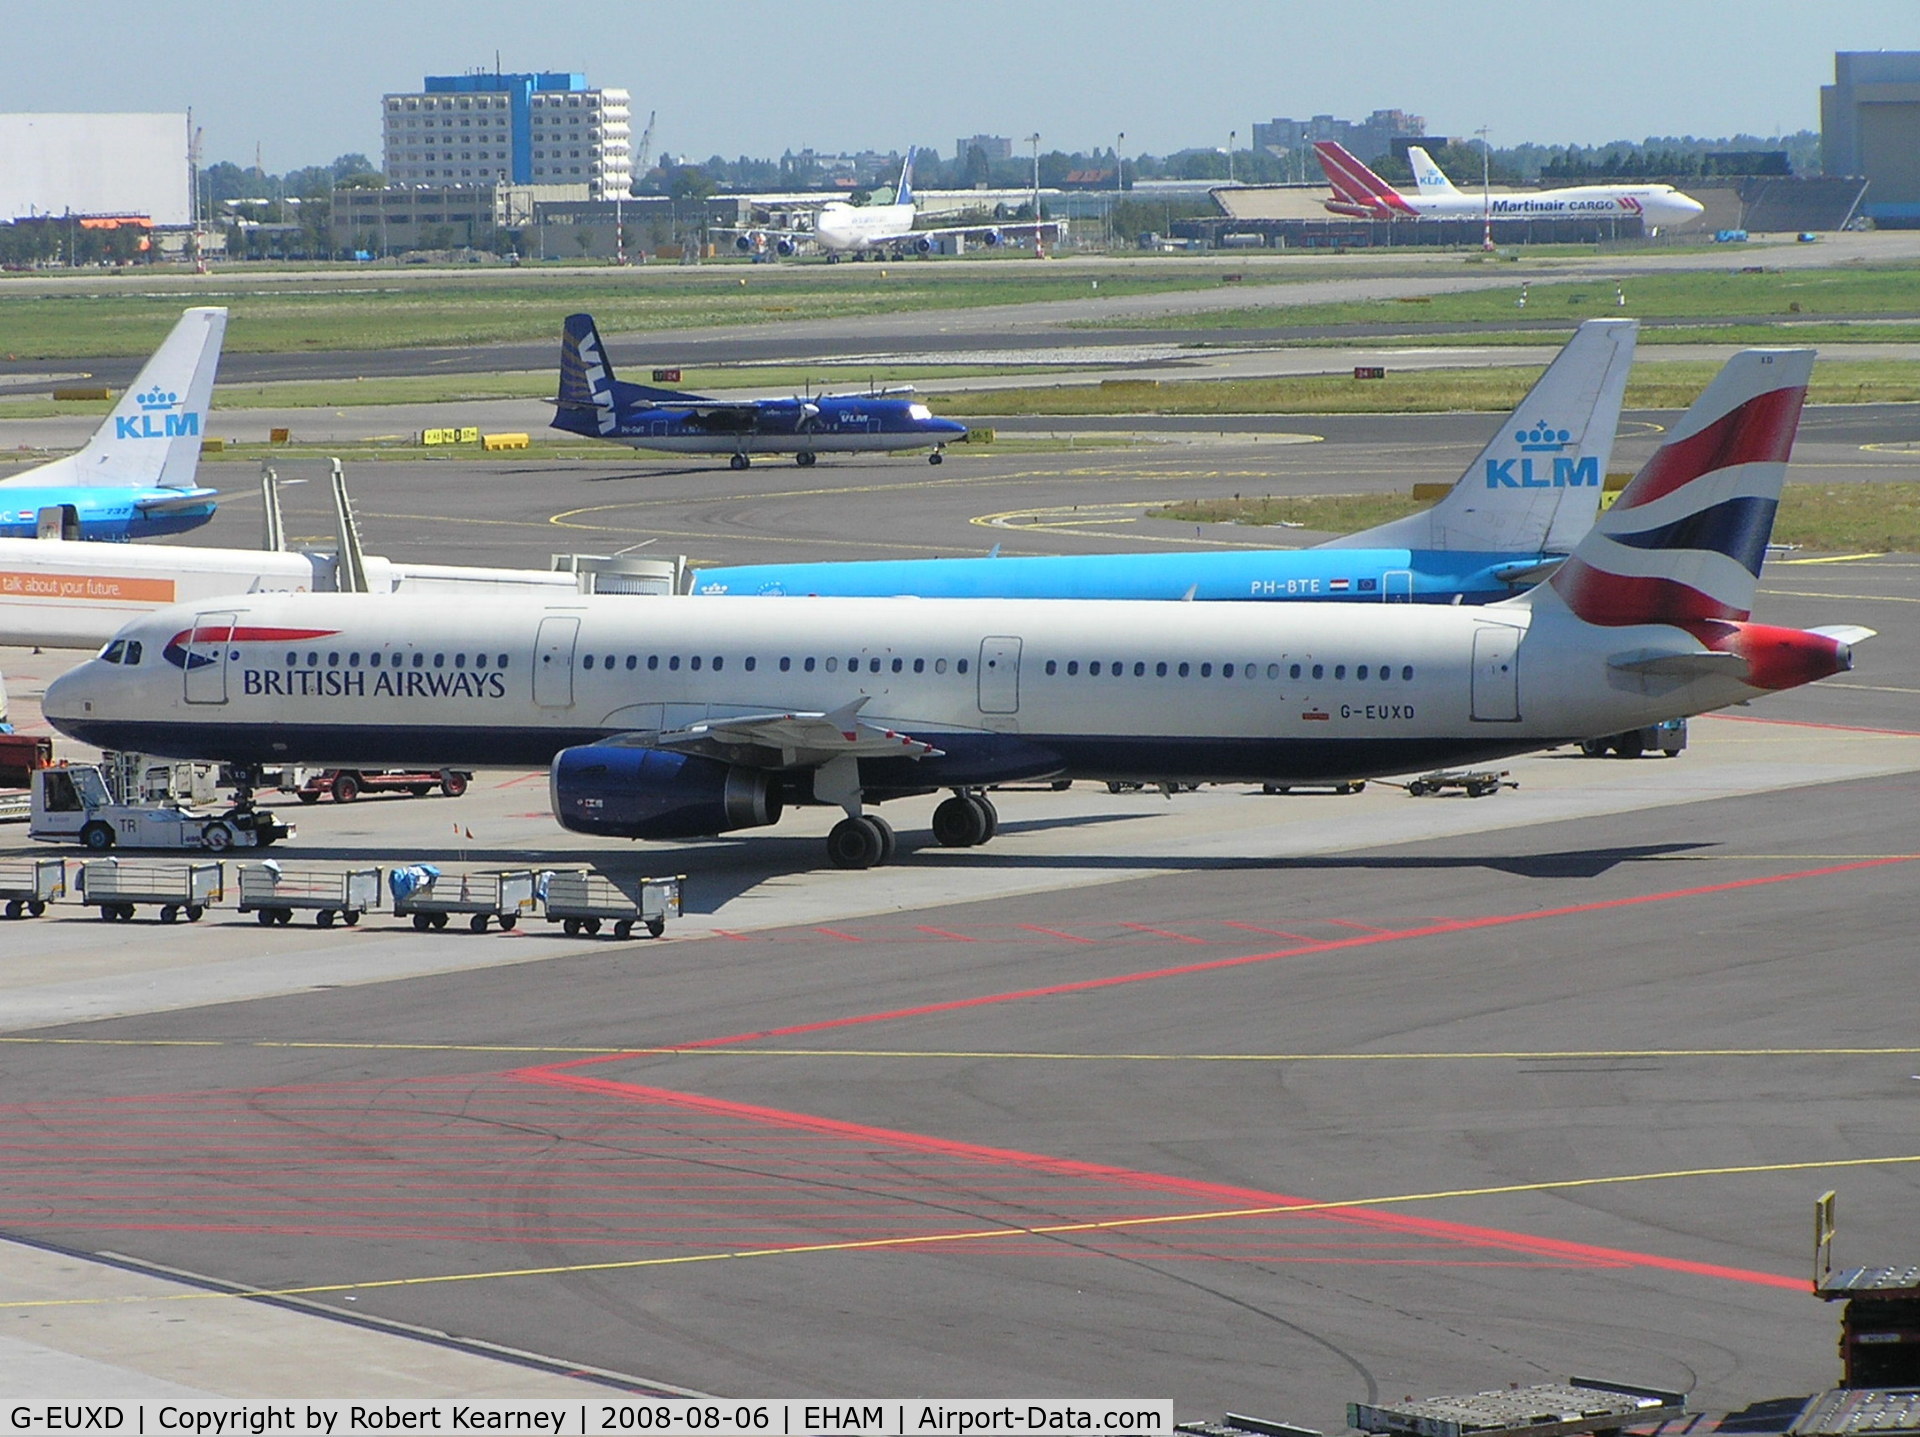 G-EUXD, 2004 Airbus A321-231 C/N 2320, BAW pushing back